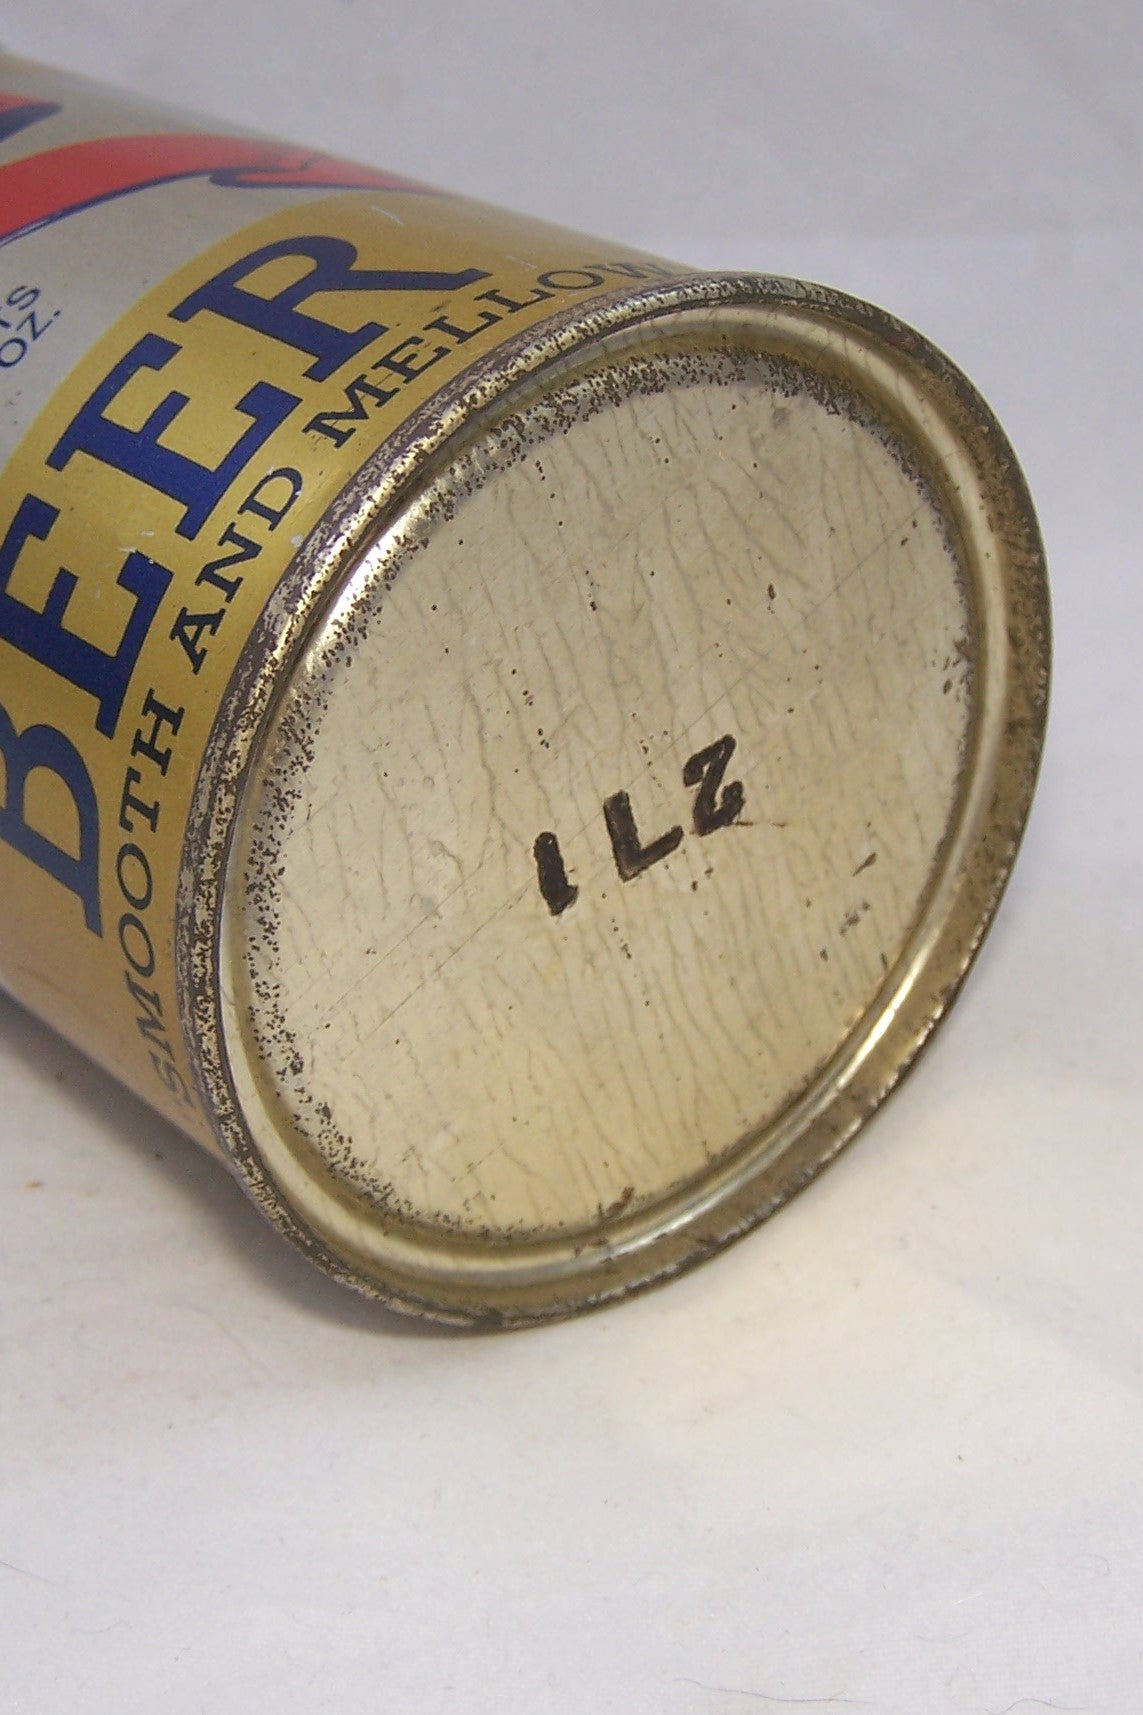 Hamm's Beer (Metallic) USBC N.L and Lilek #380, Grade 1/1+ Sold on 08/31/19